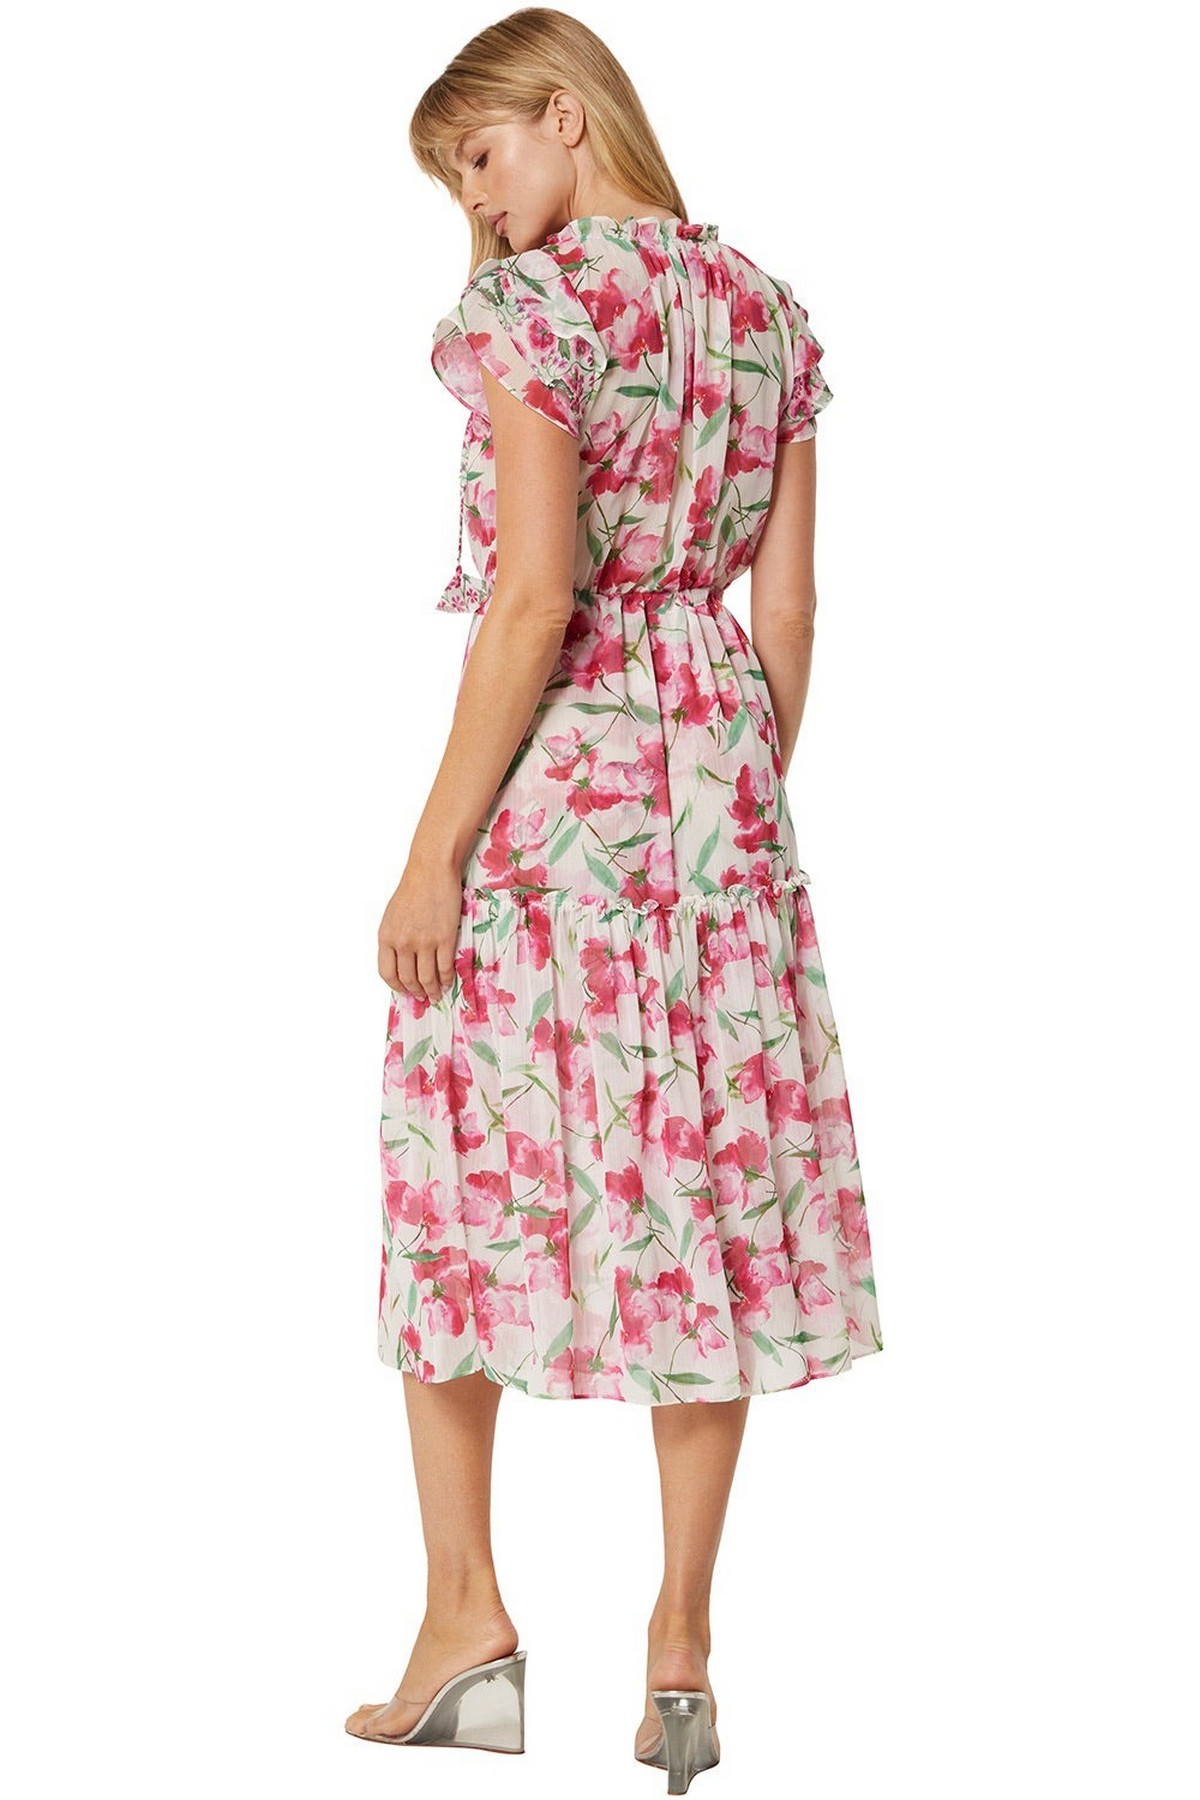 Misa - Nika Dress - Fuchsia - Kleed midi V bloemenprint fuchsia